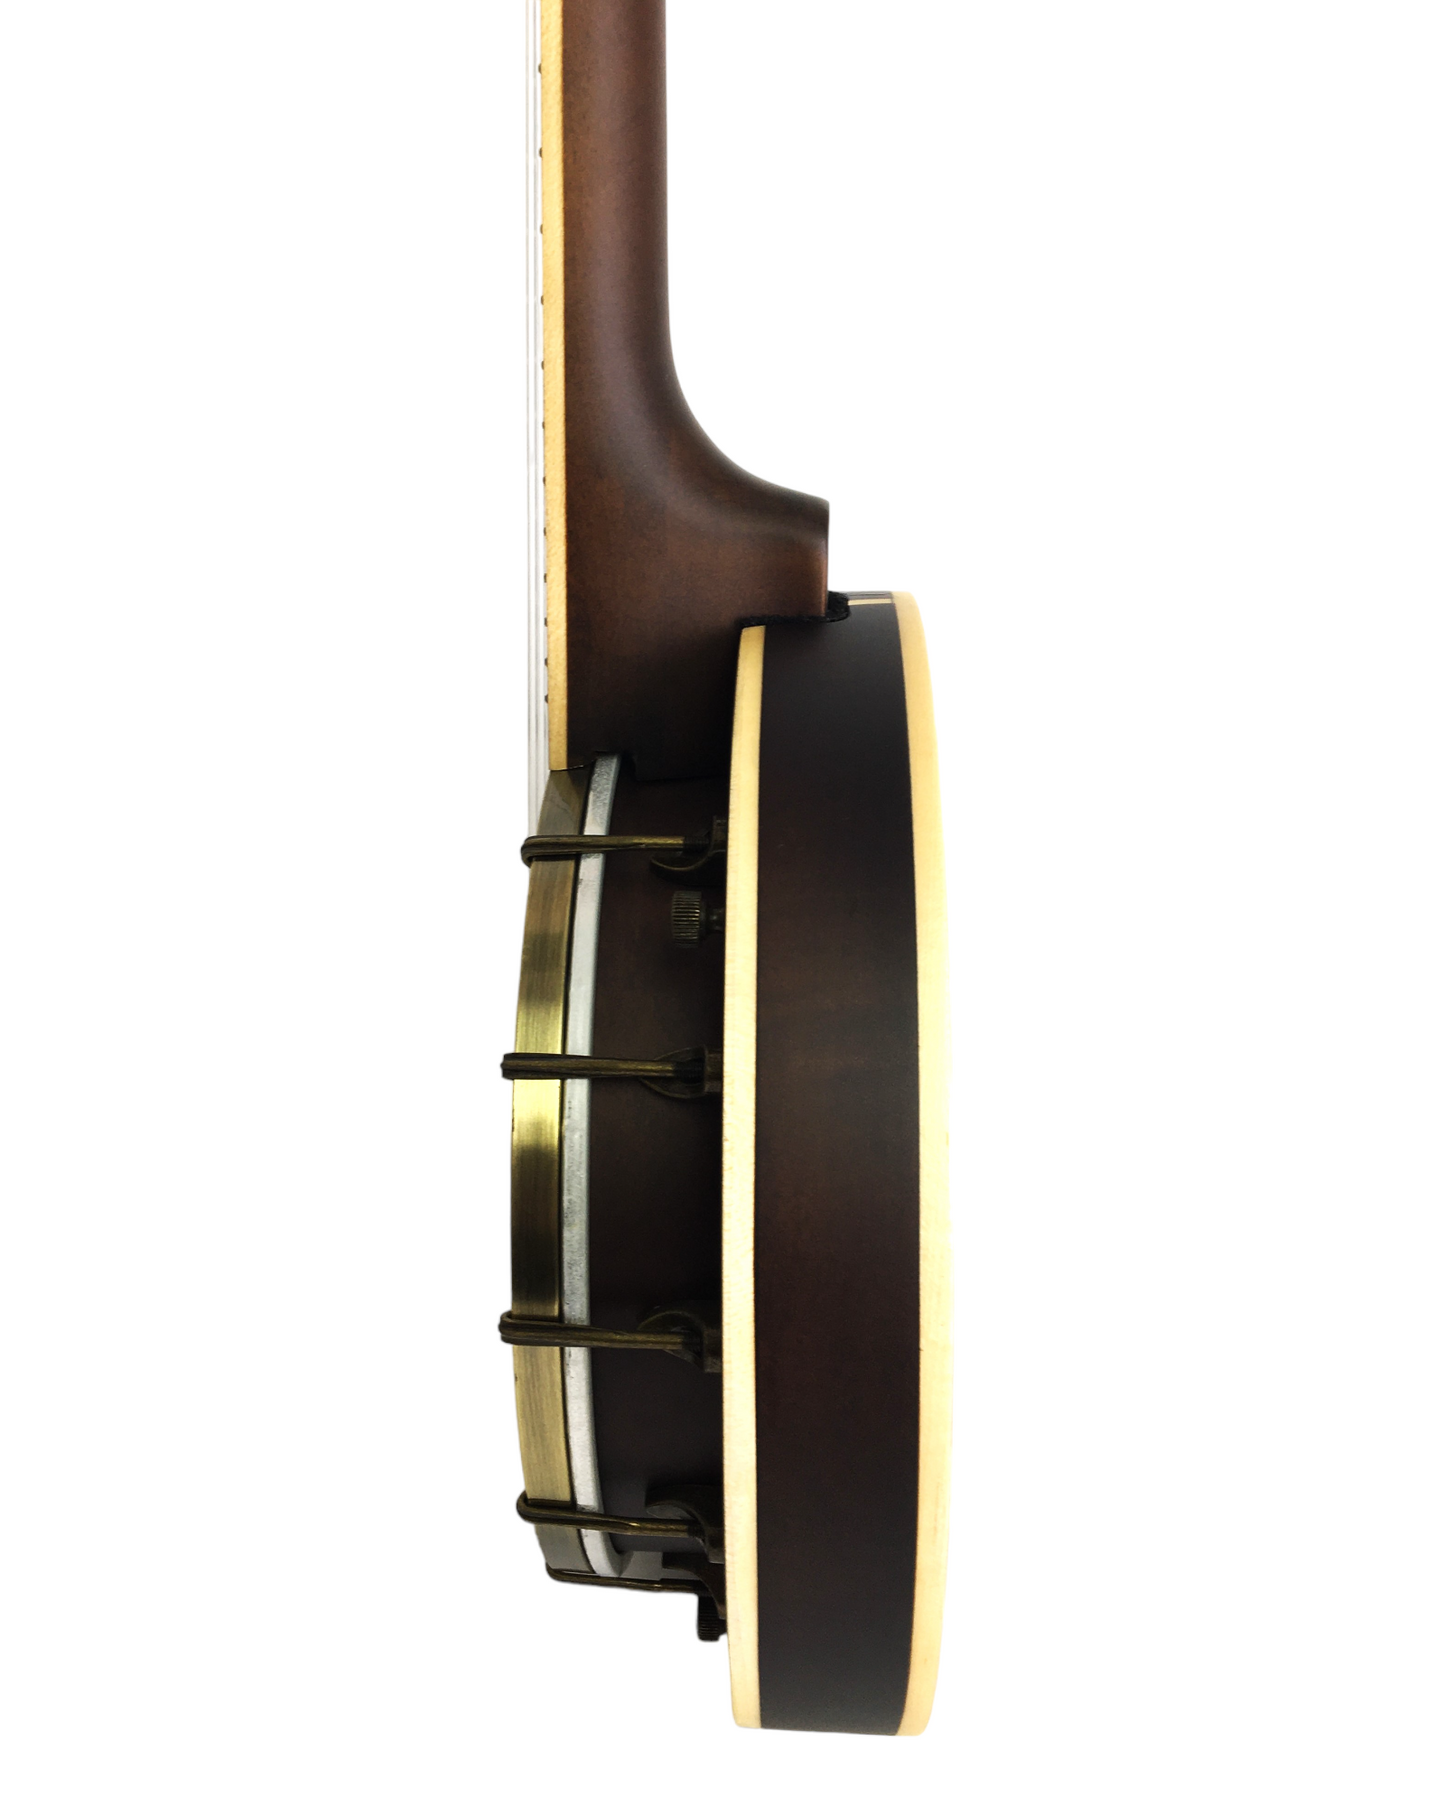 Caraya 4-String Maple Body Resonator Banjolele - Natural SBJUK118